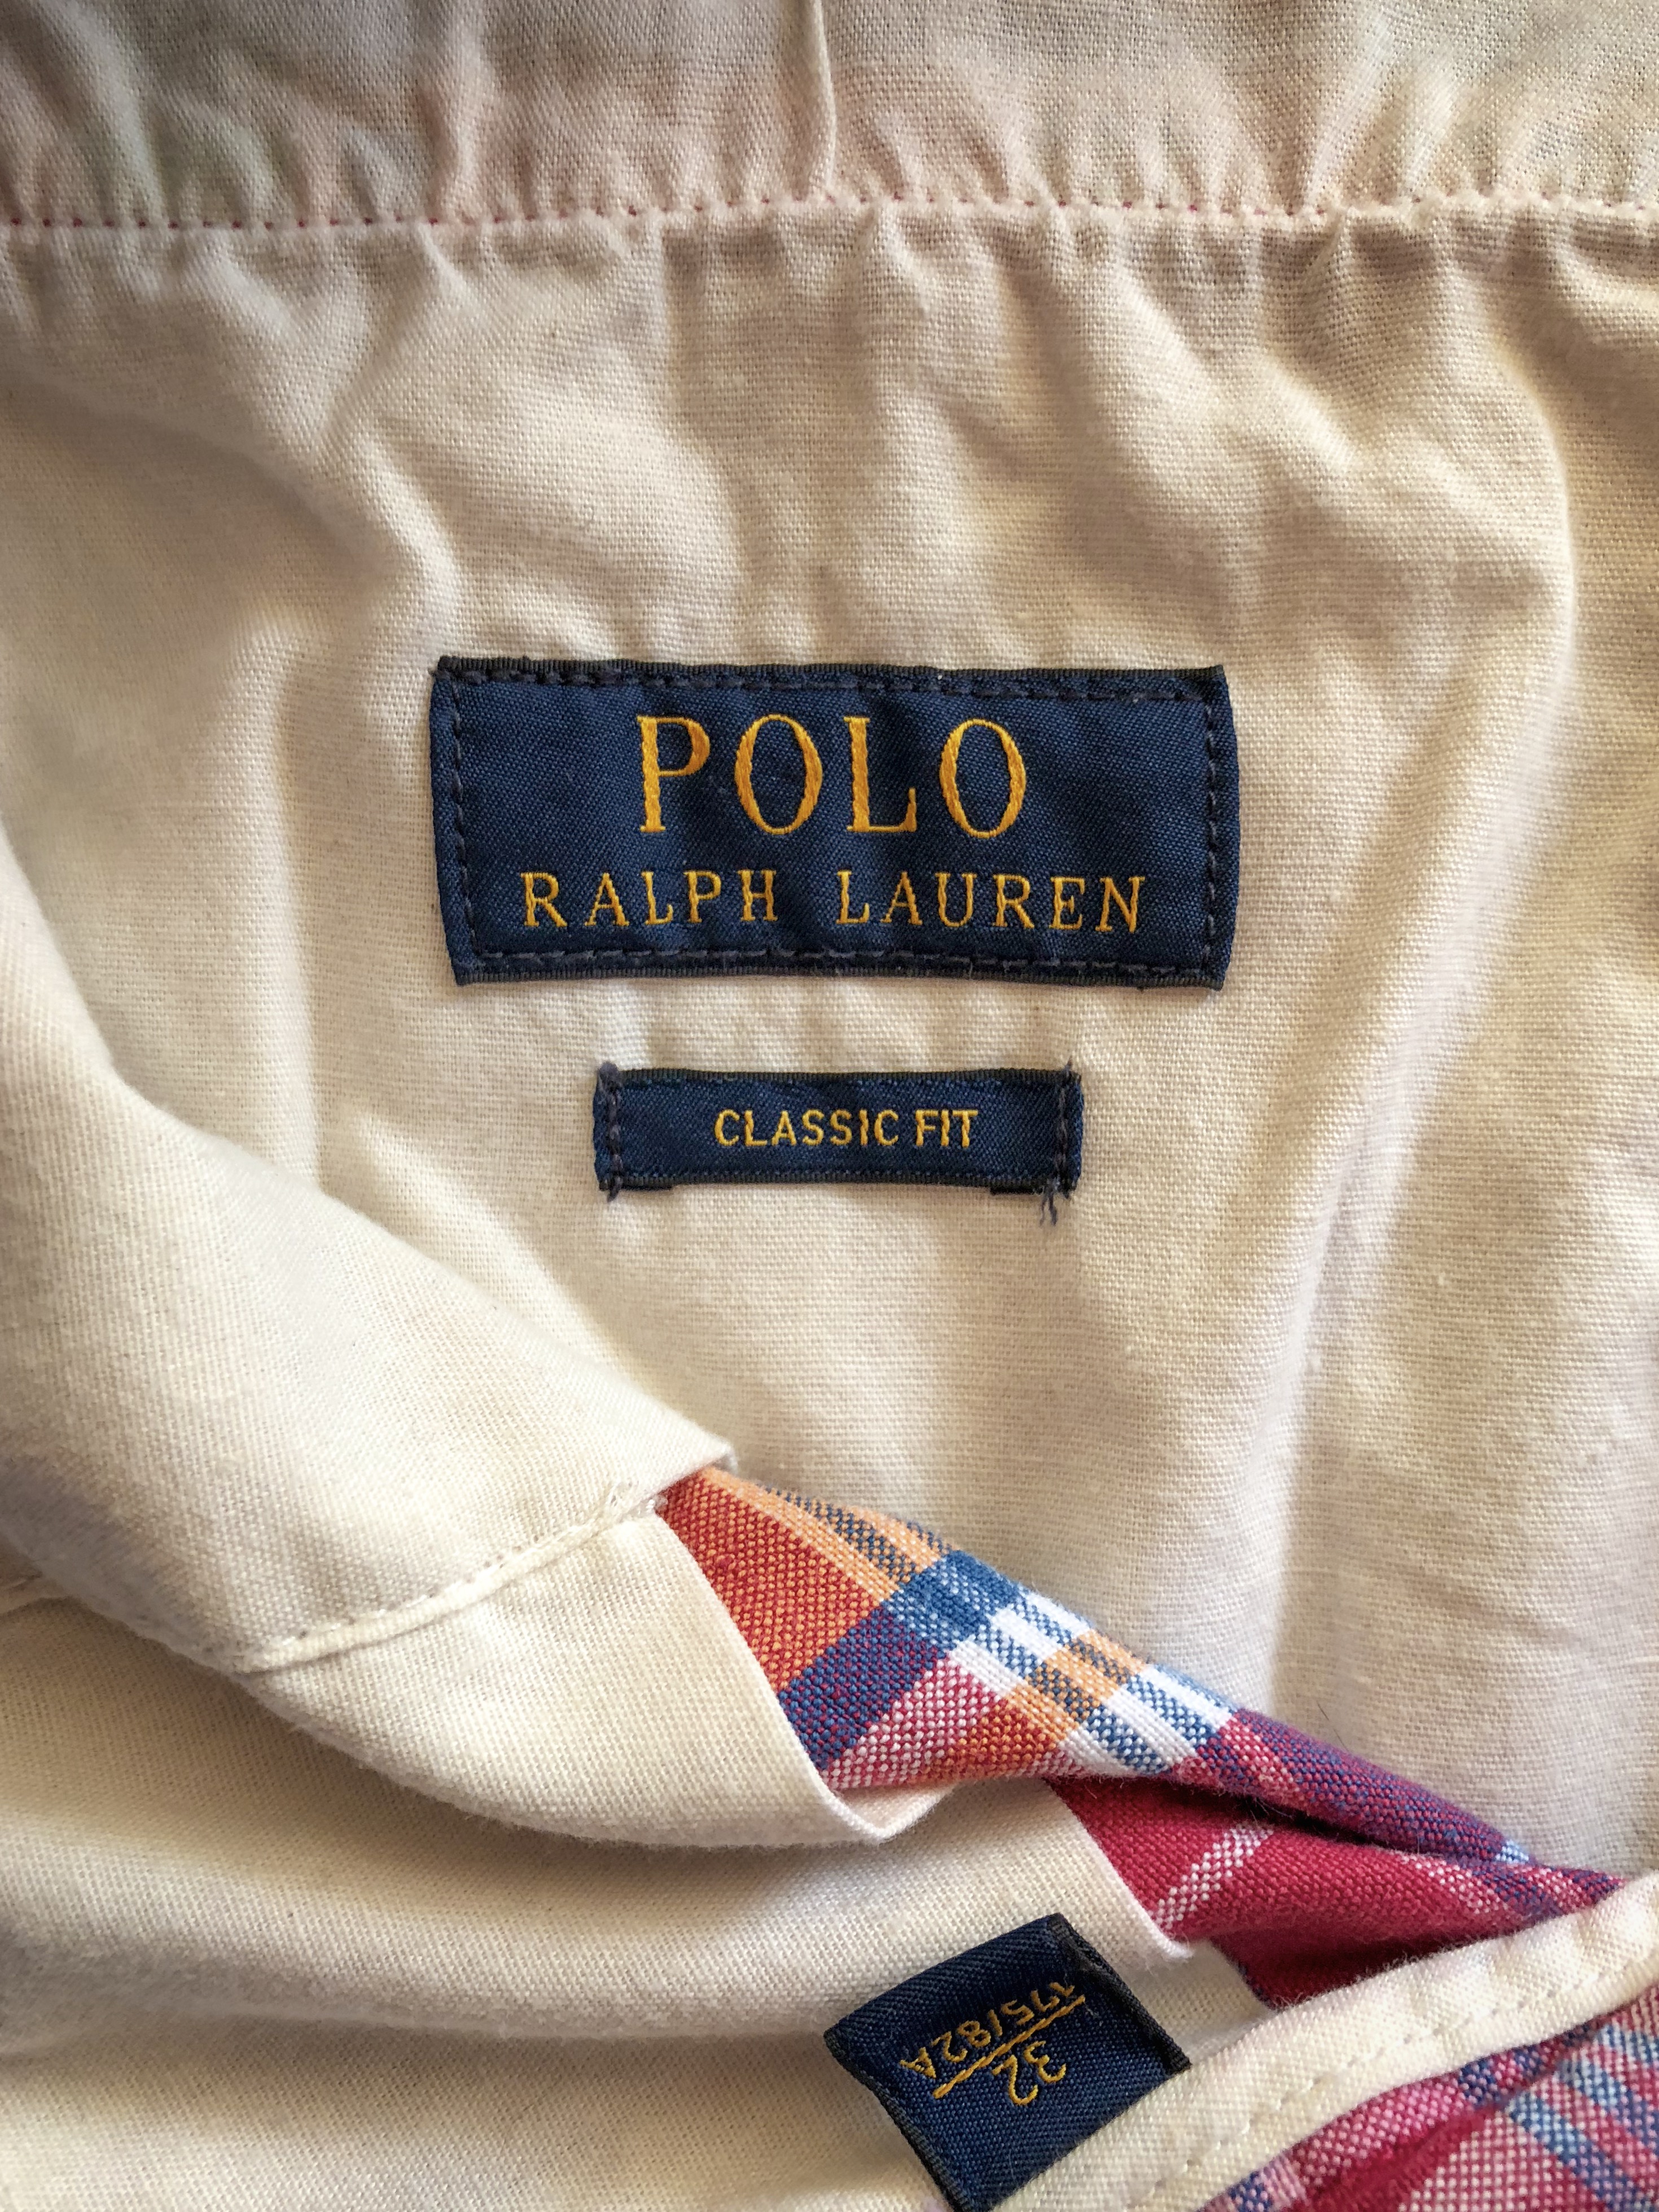 authentic polo ralph lauren tags